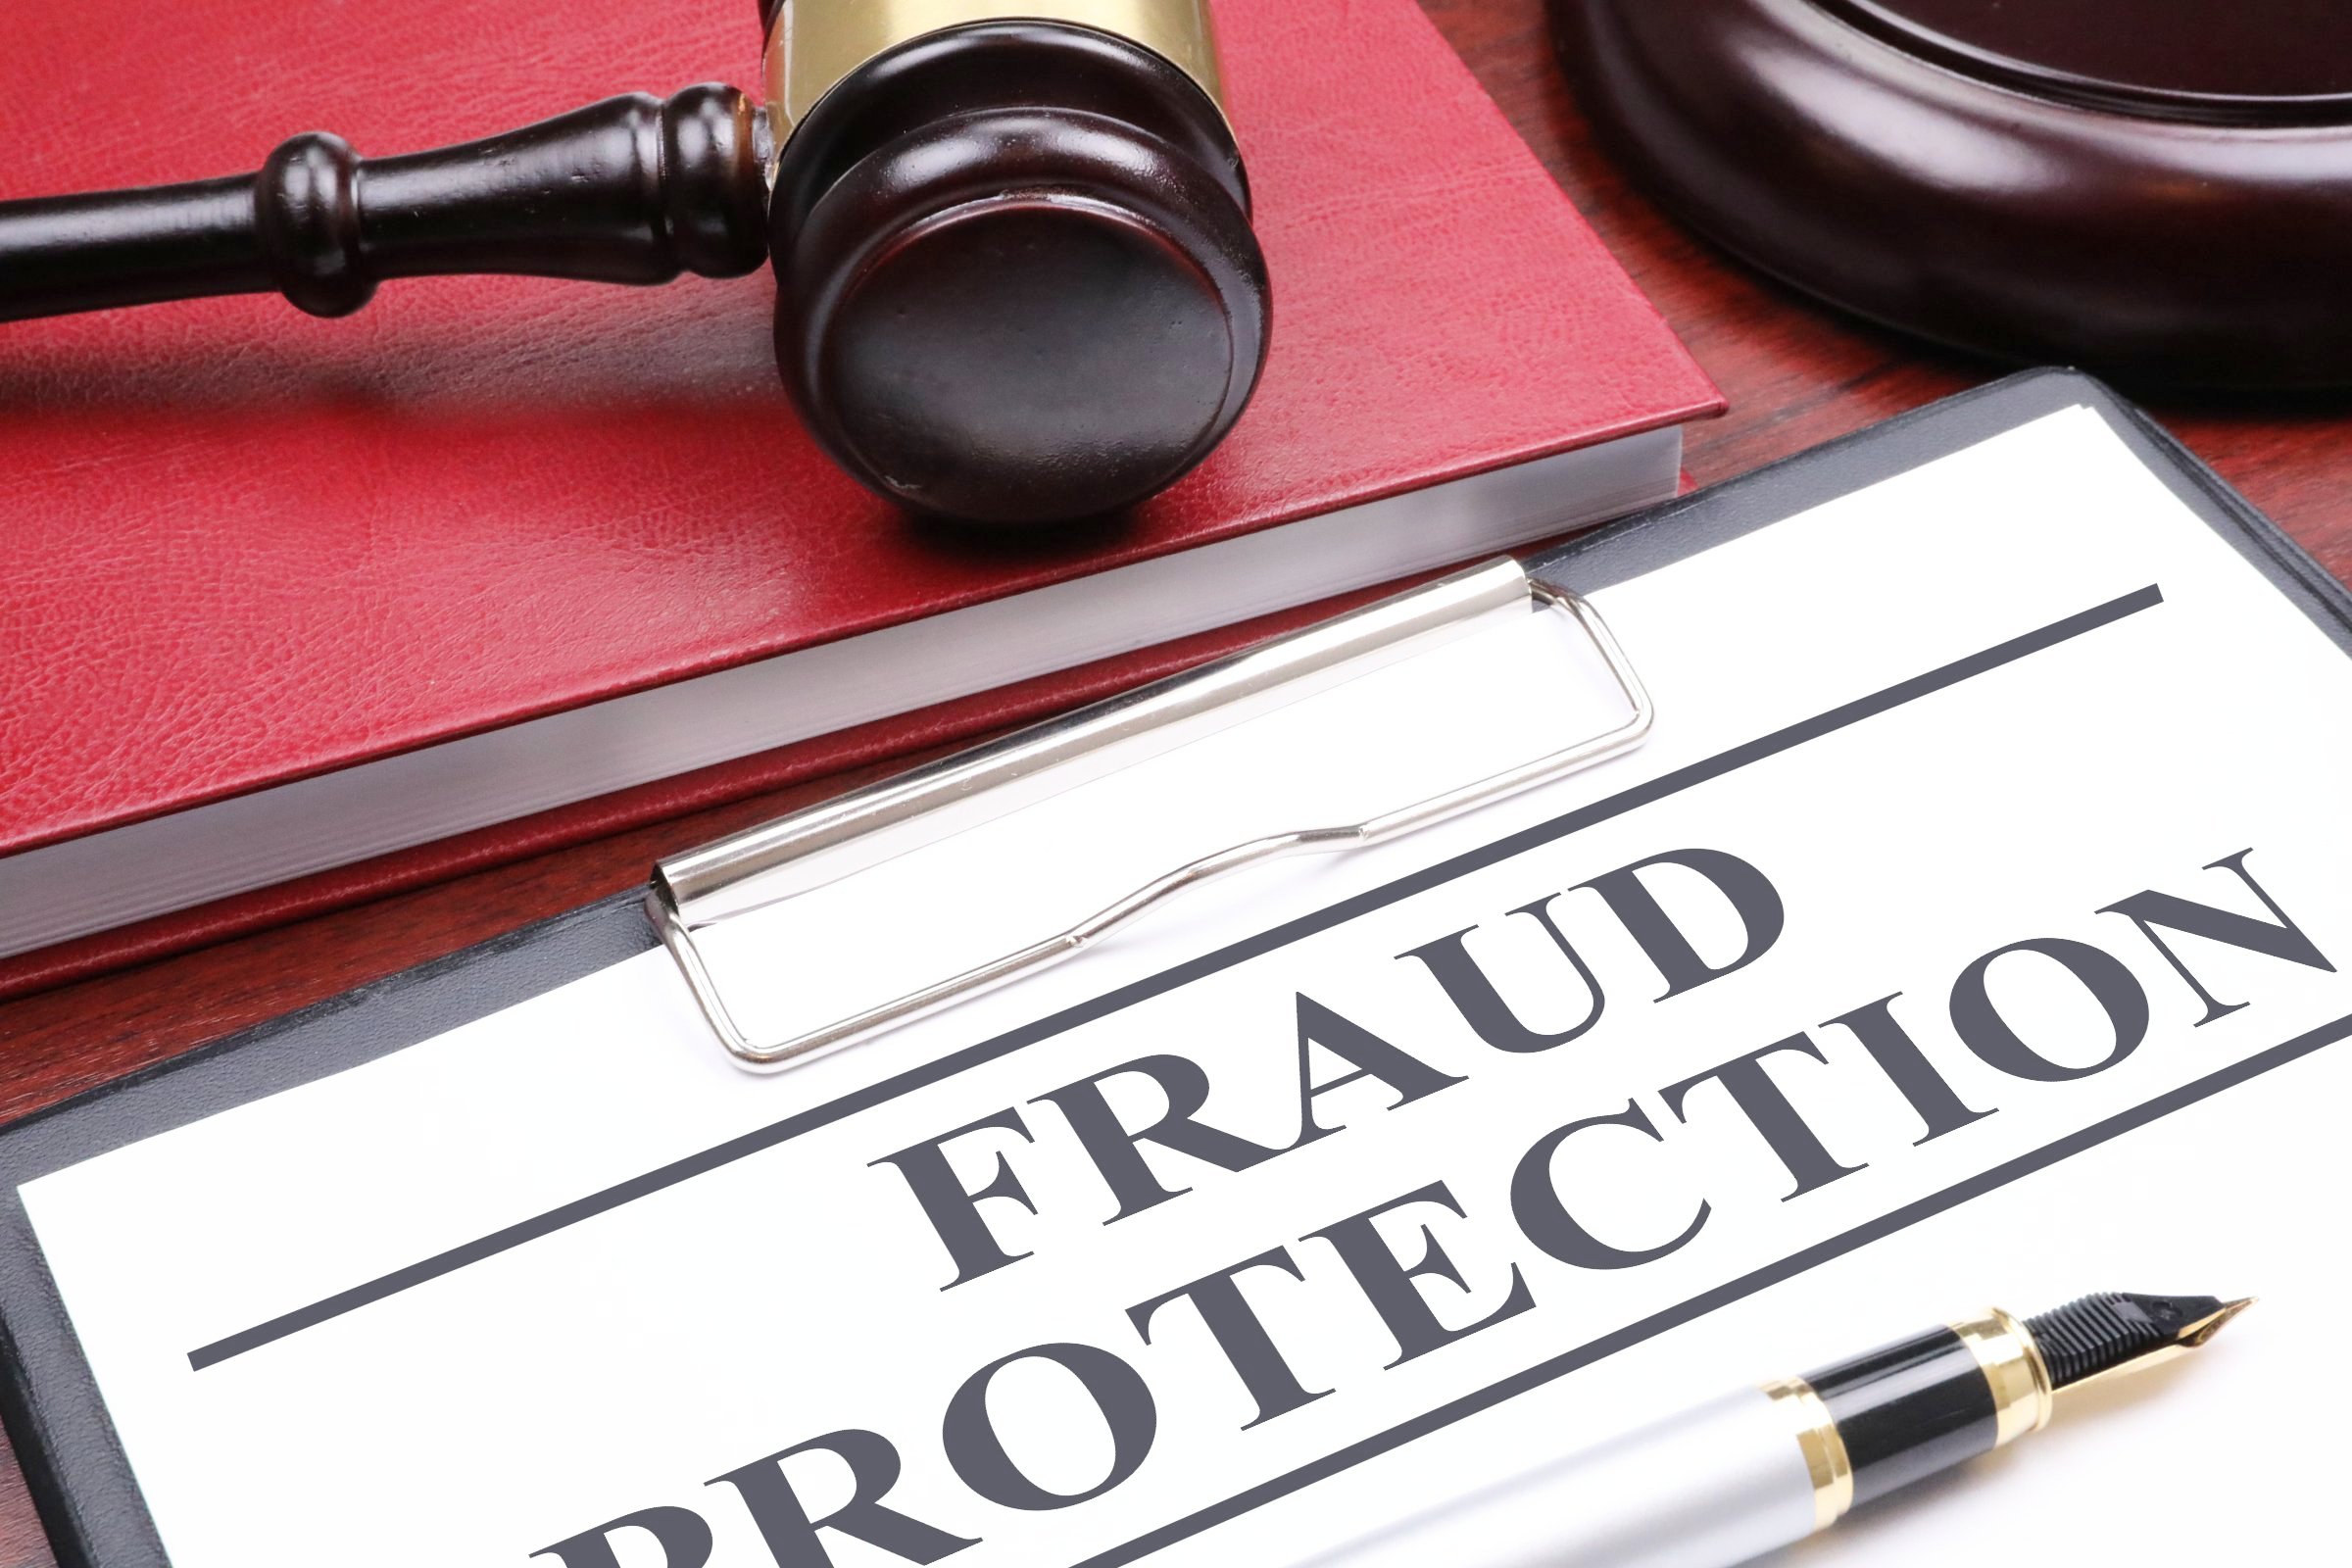 fraud protection